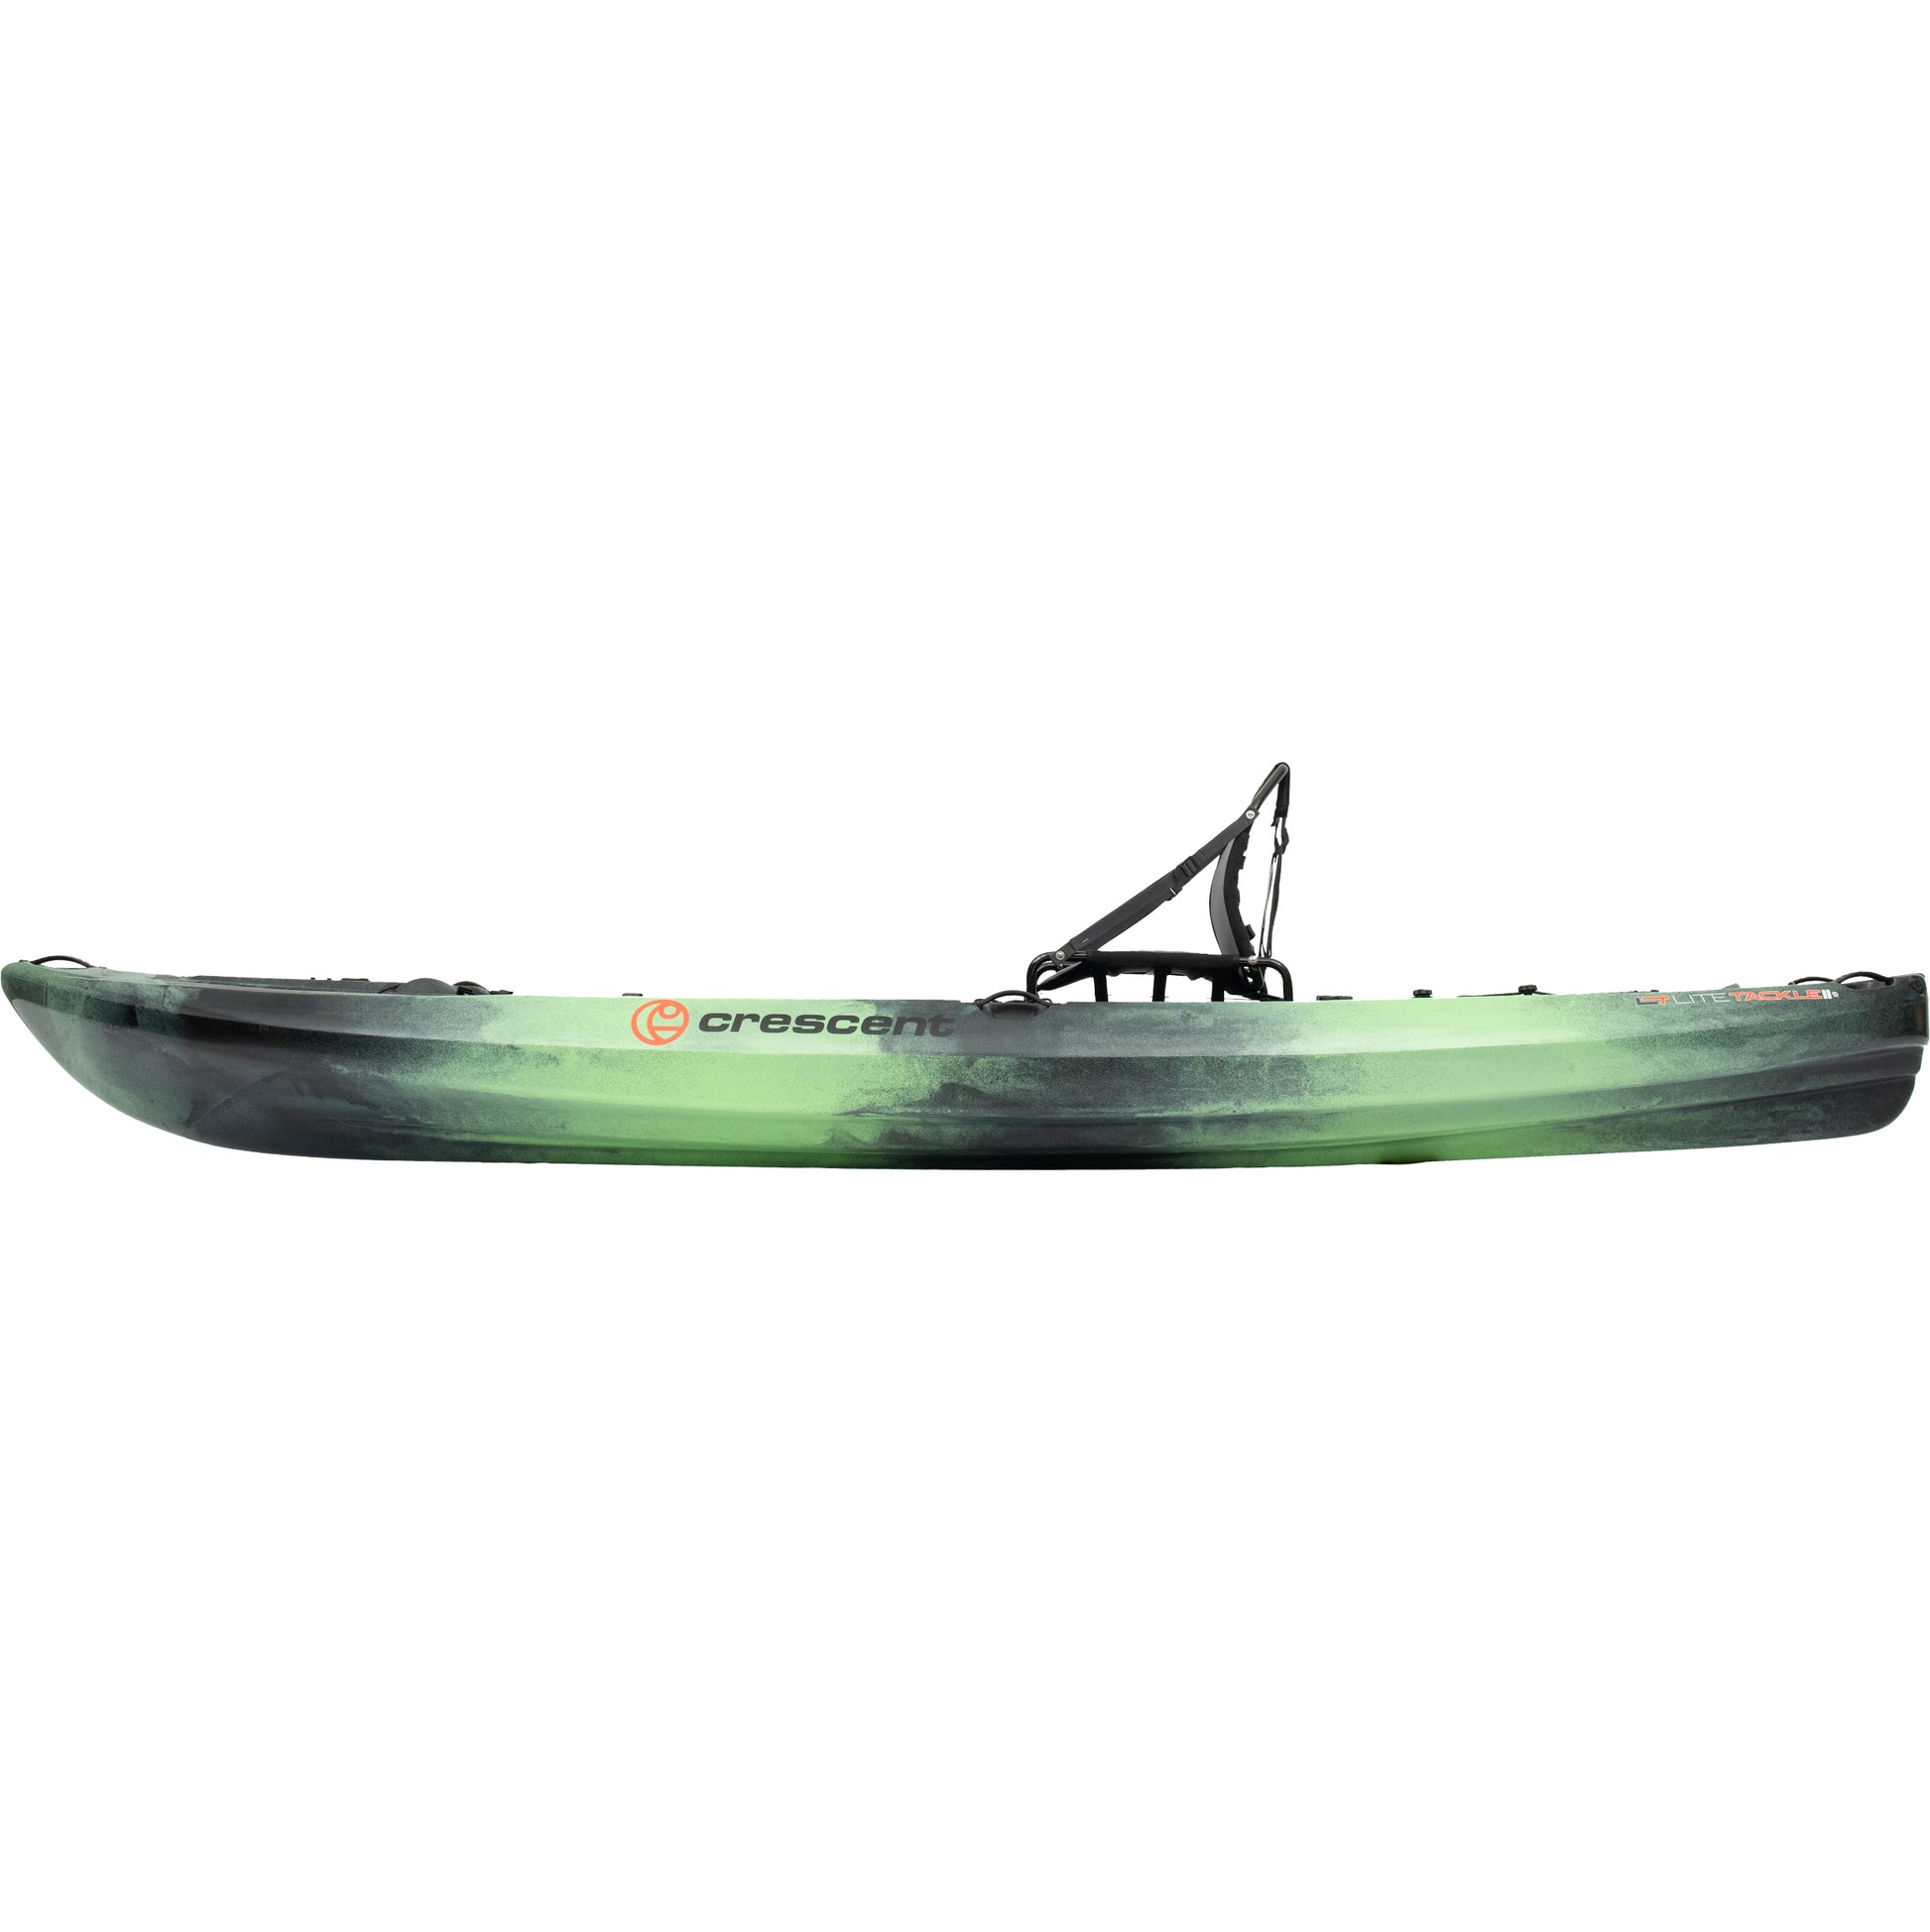 x - Motorized Fishing Kayaks  Canoe fishing, Kayak bass fishing